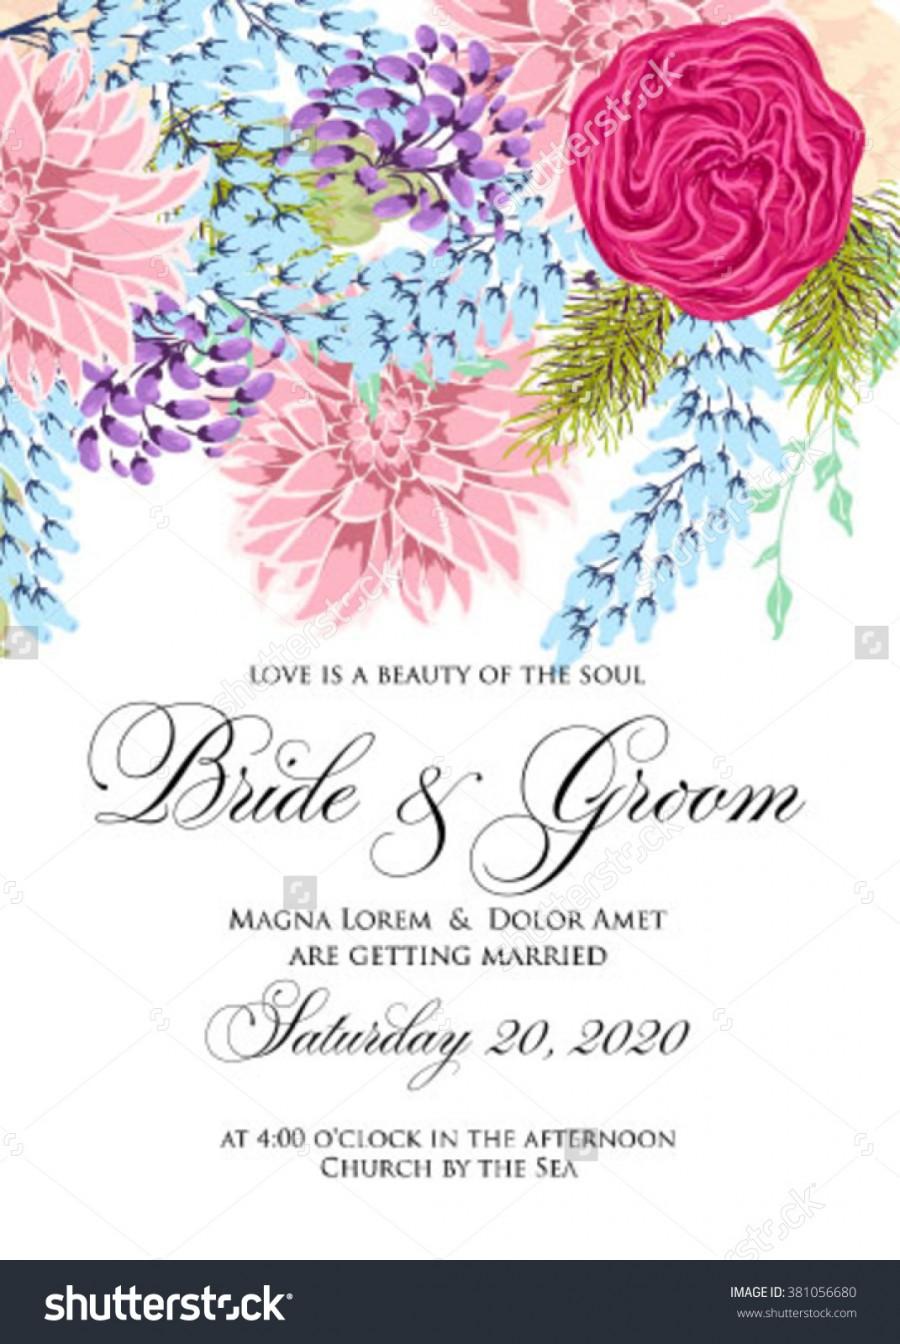 Hochzeit - Wedding card or invitation with chrysanthemum flowers on striped background